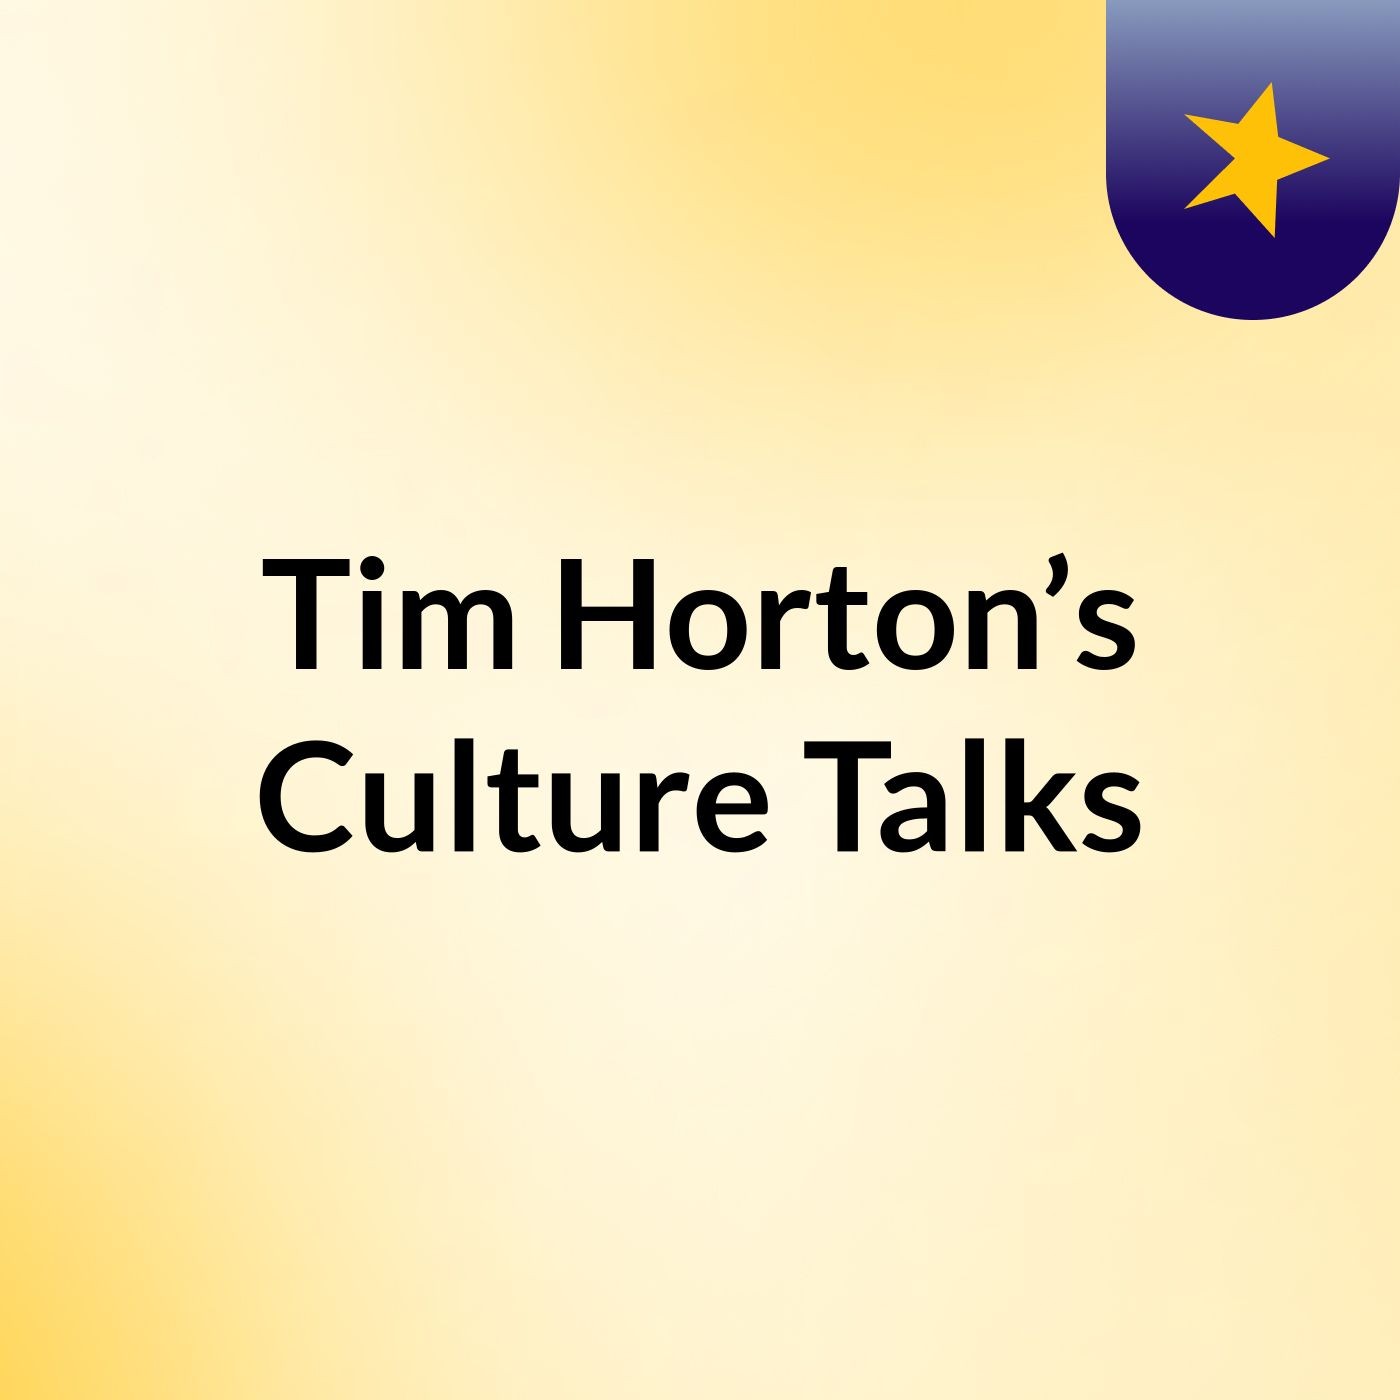 Tim Horton’s Culture Talks